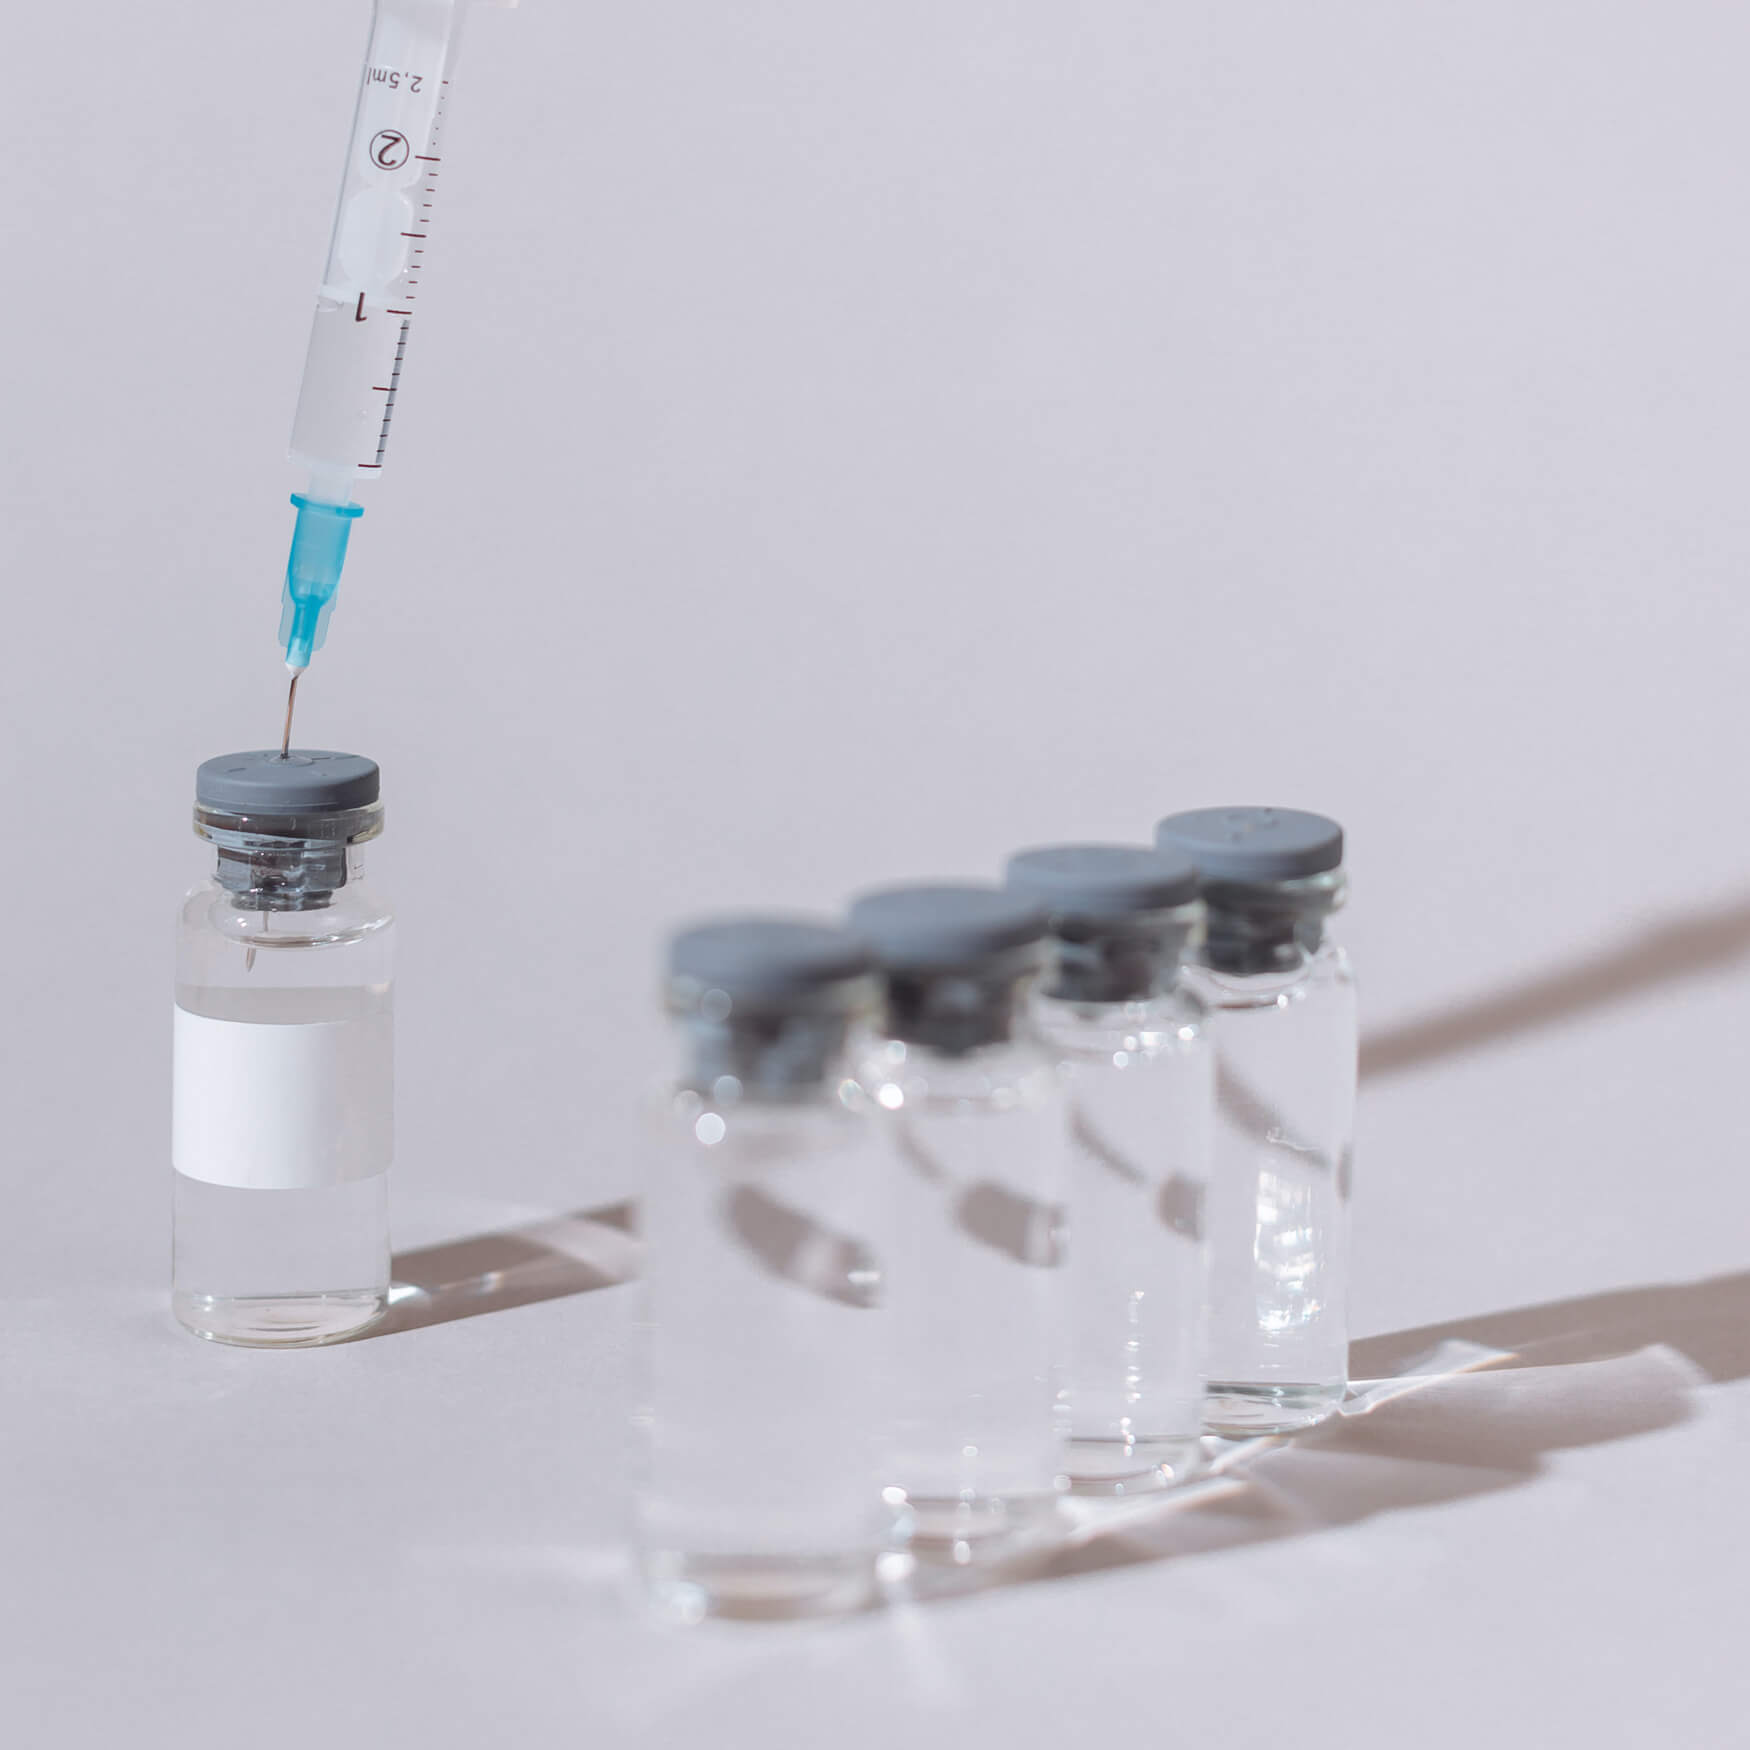 pharmaceutique seringue packaging emballage vaccin test